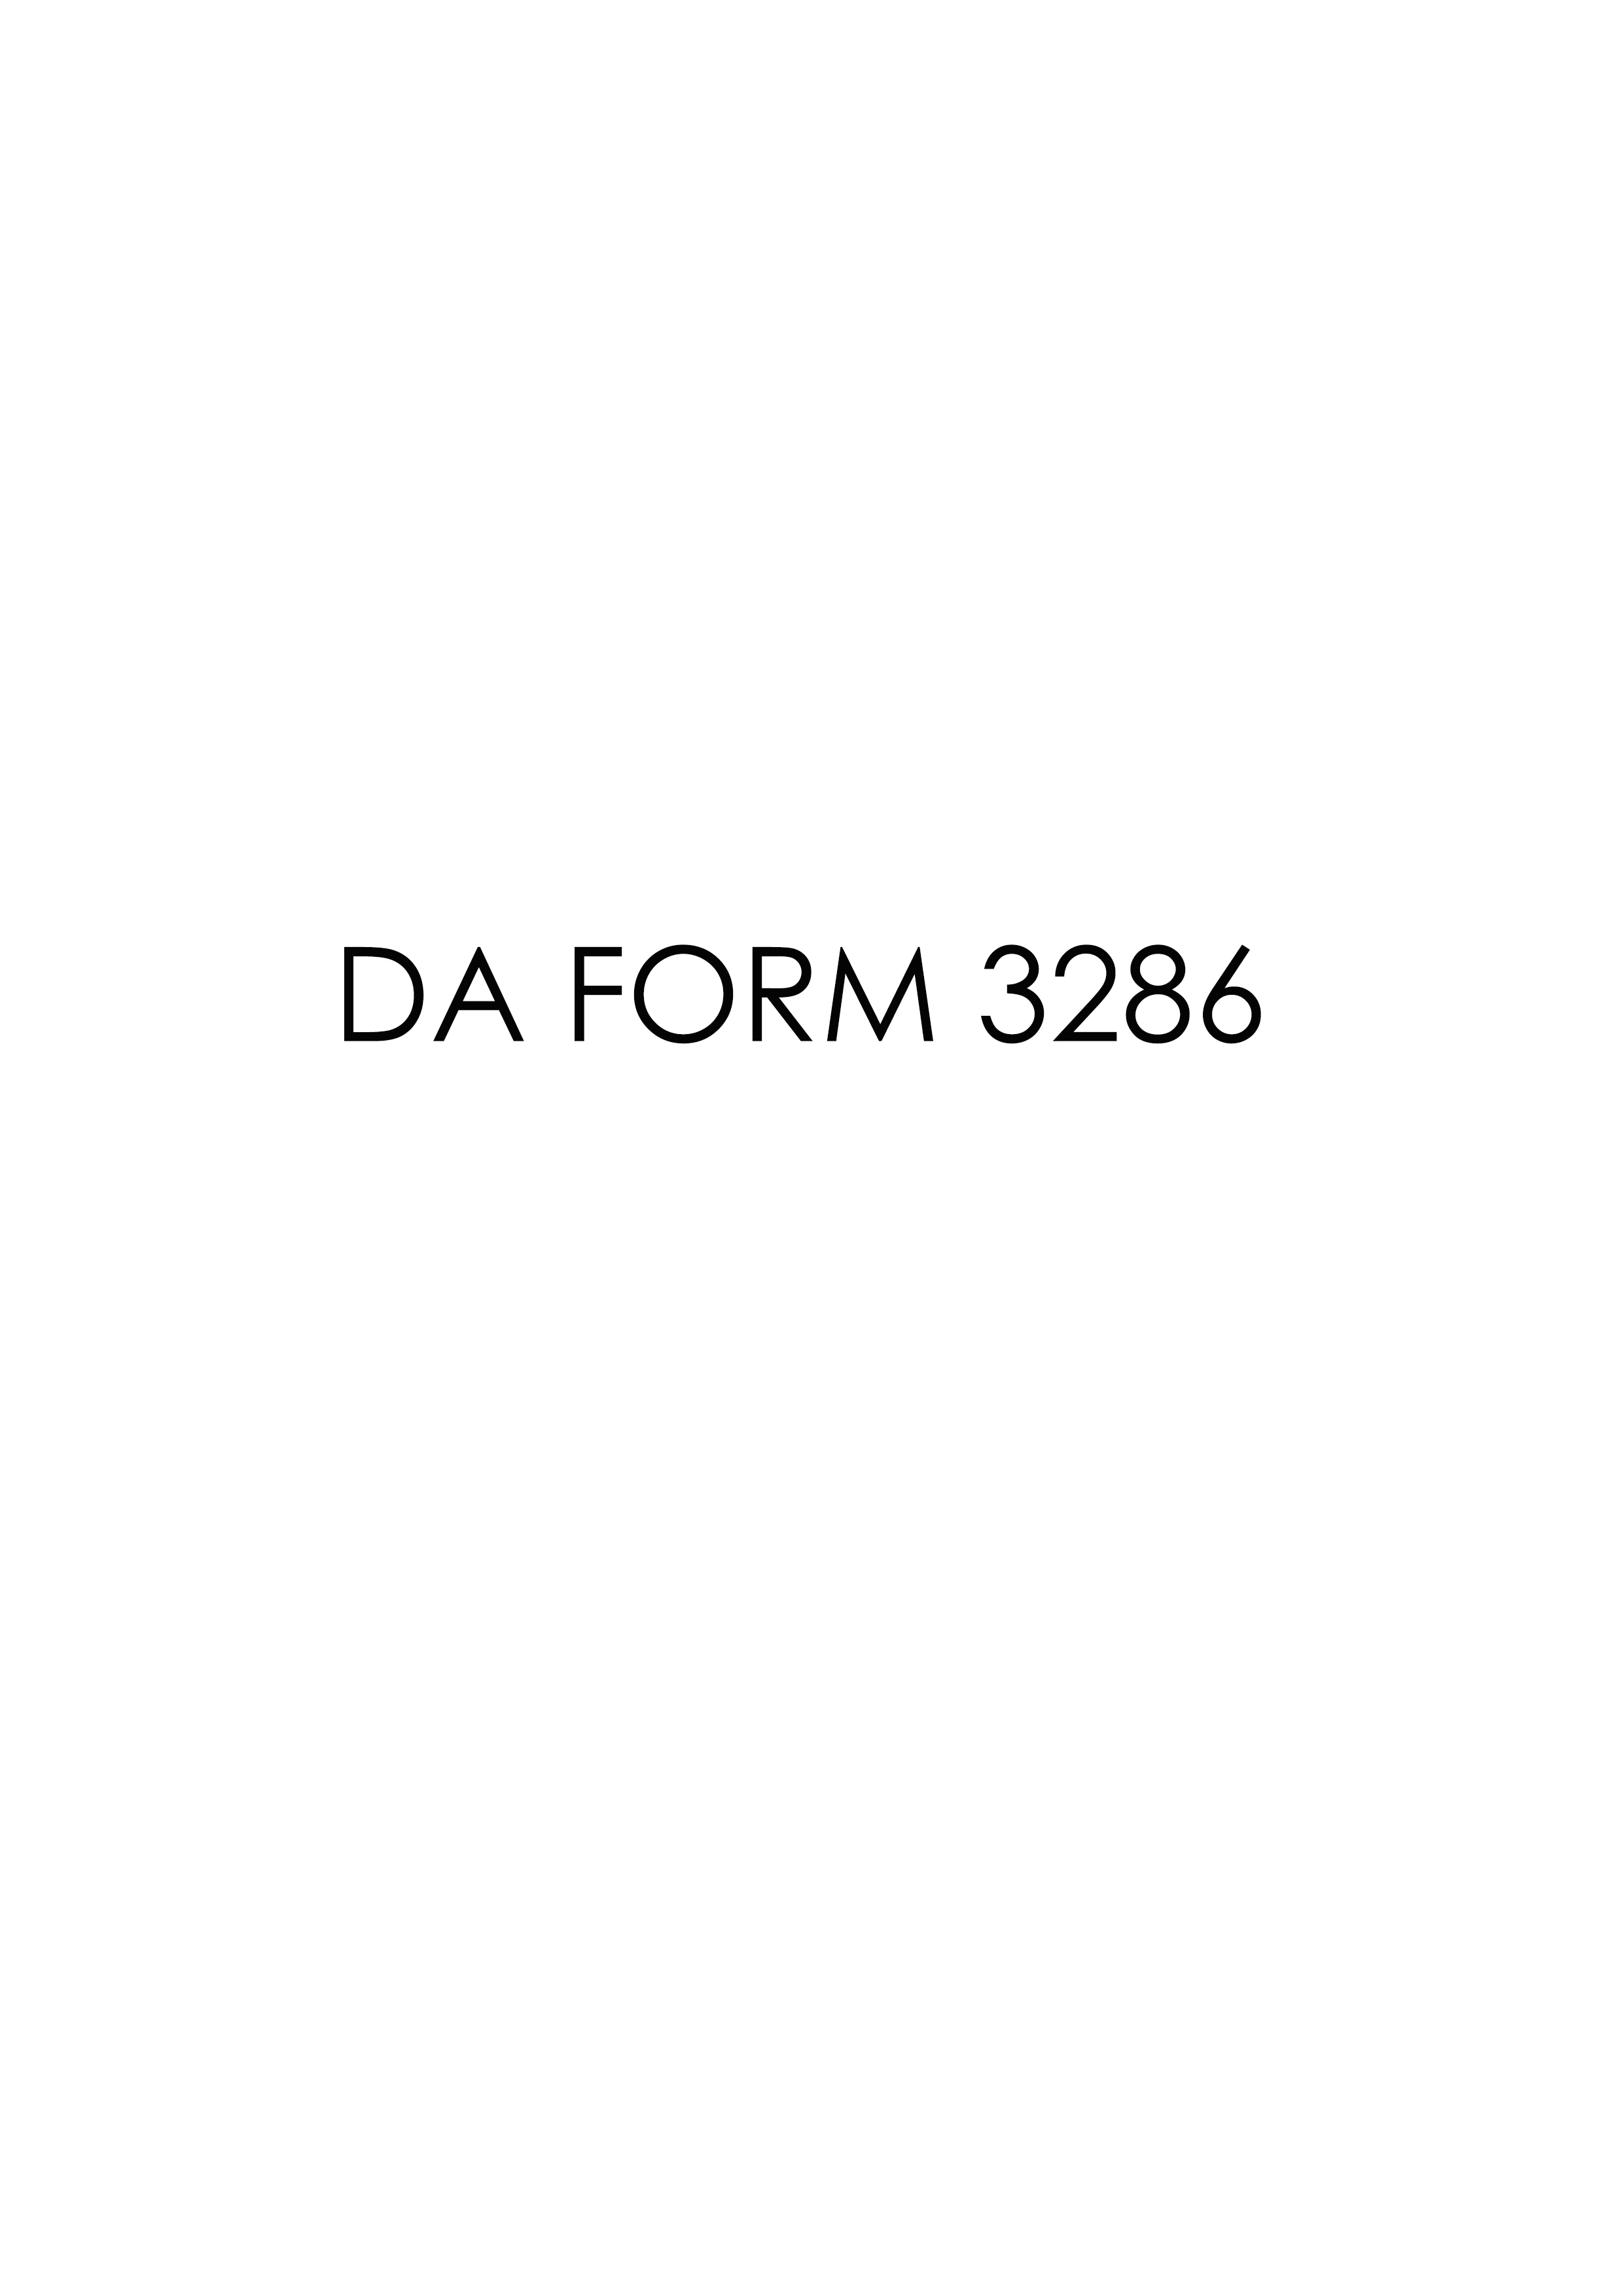 da Form 3286 fillable